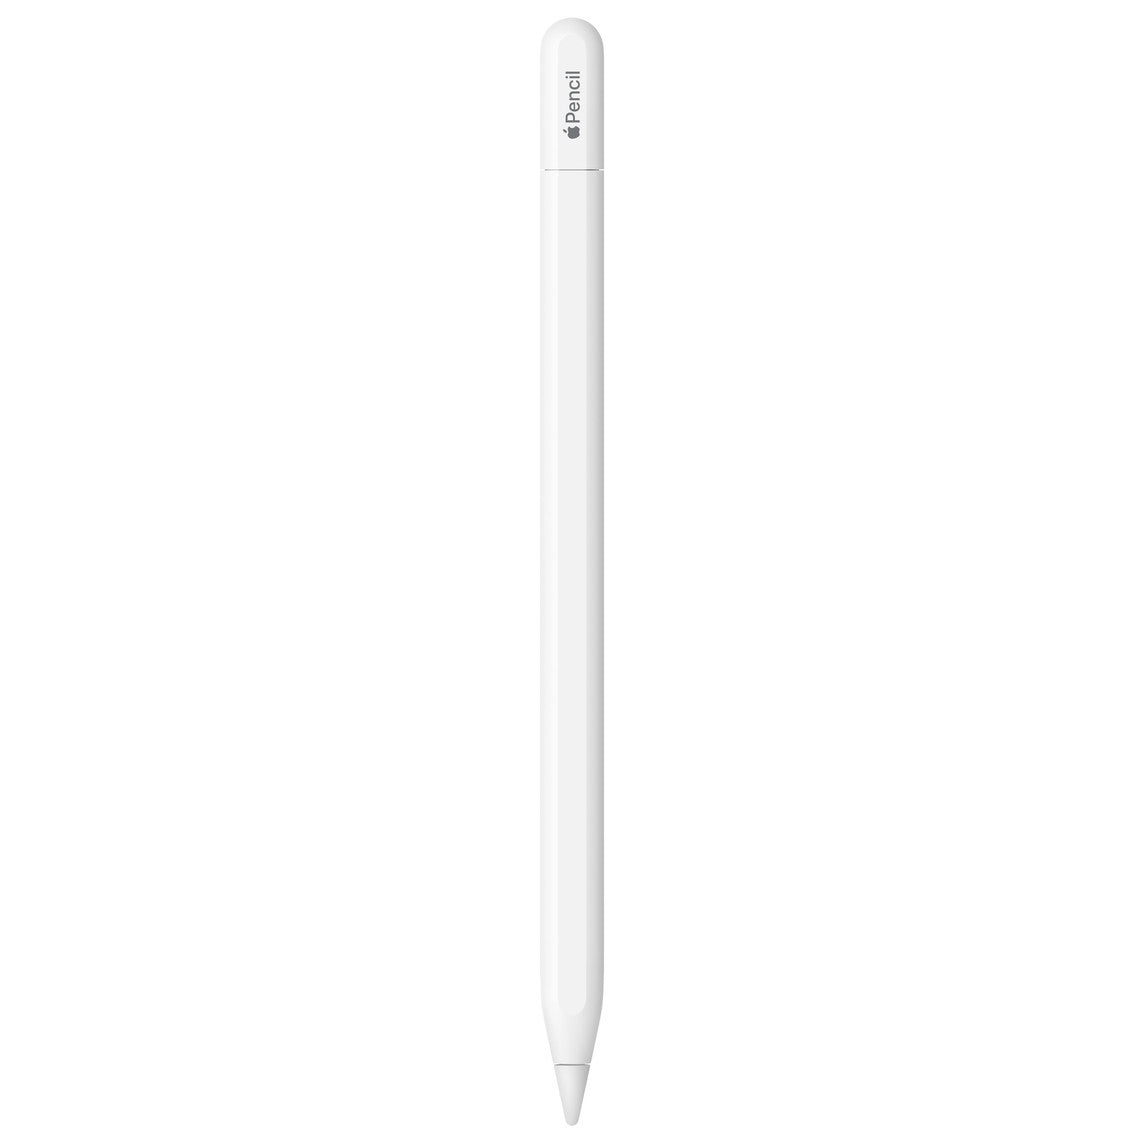 Apple Pencil USB-C - White